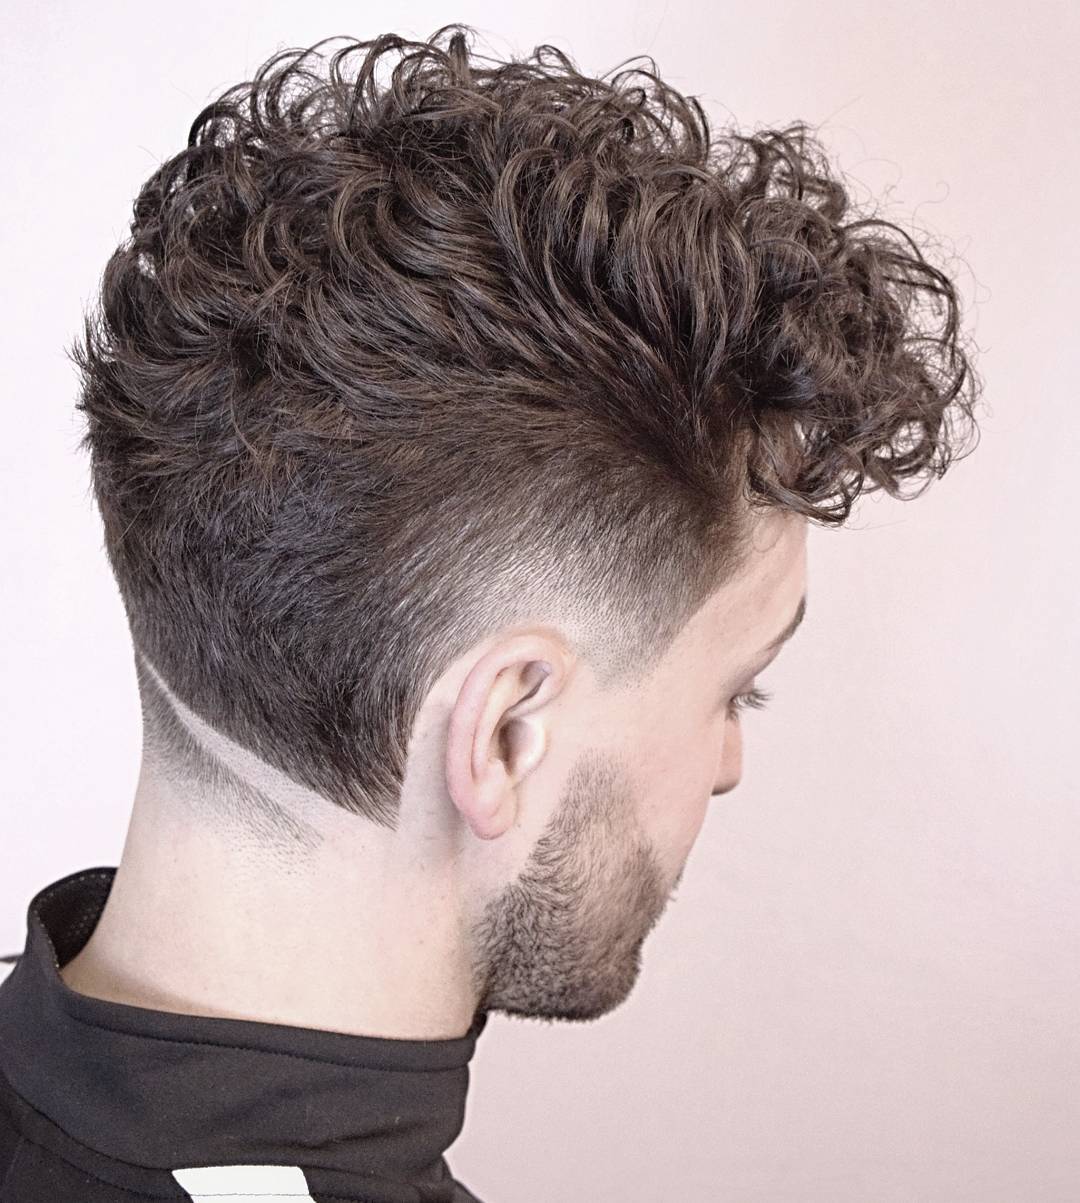 paul_barbercode shaved line bold cut mens haircuts neck design neckline hair